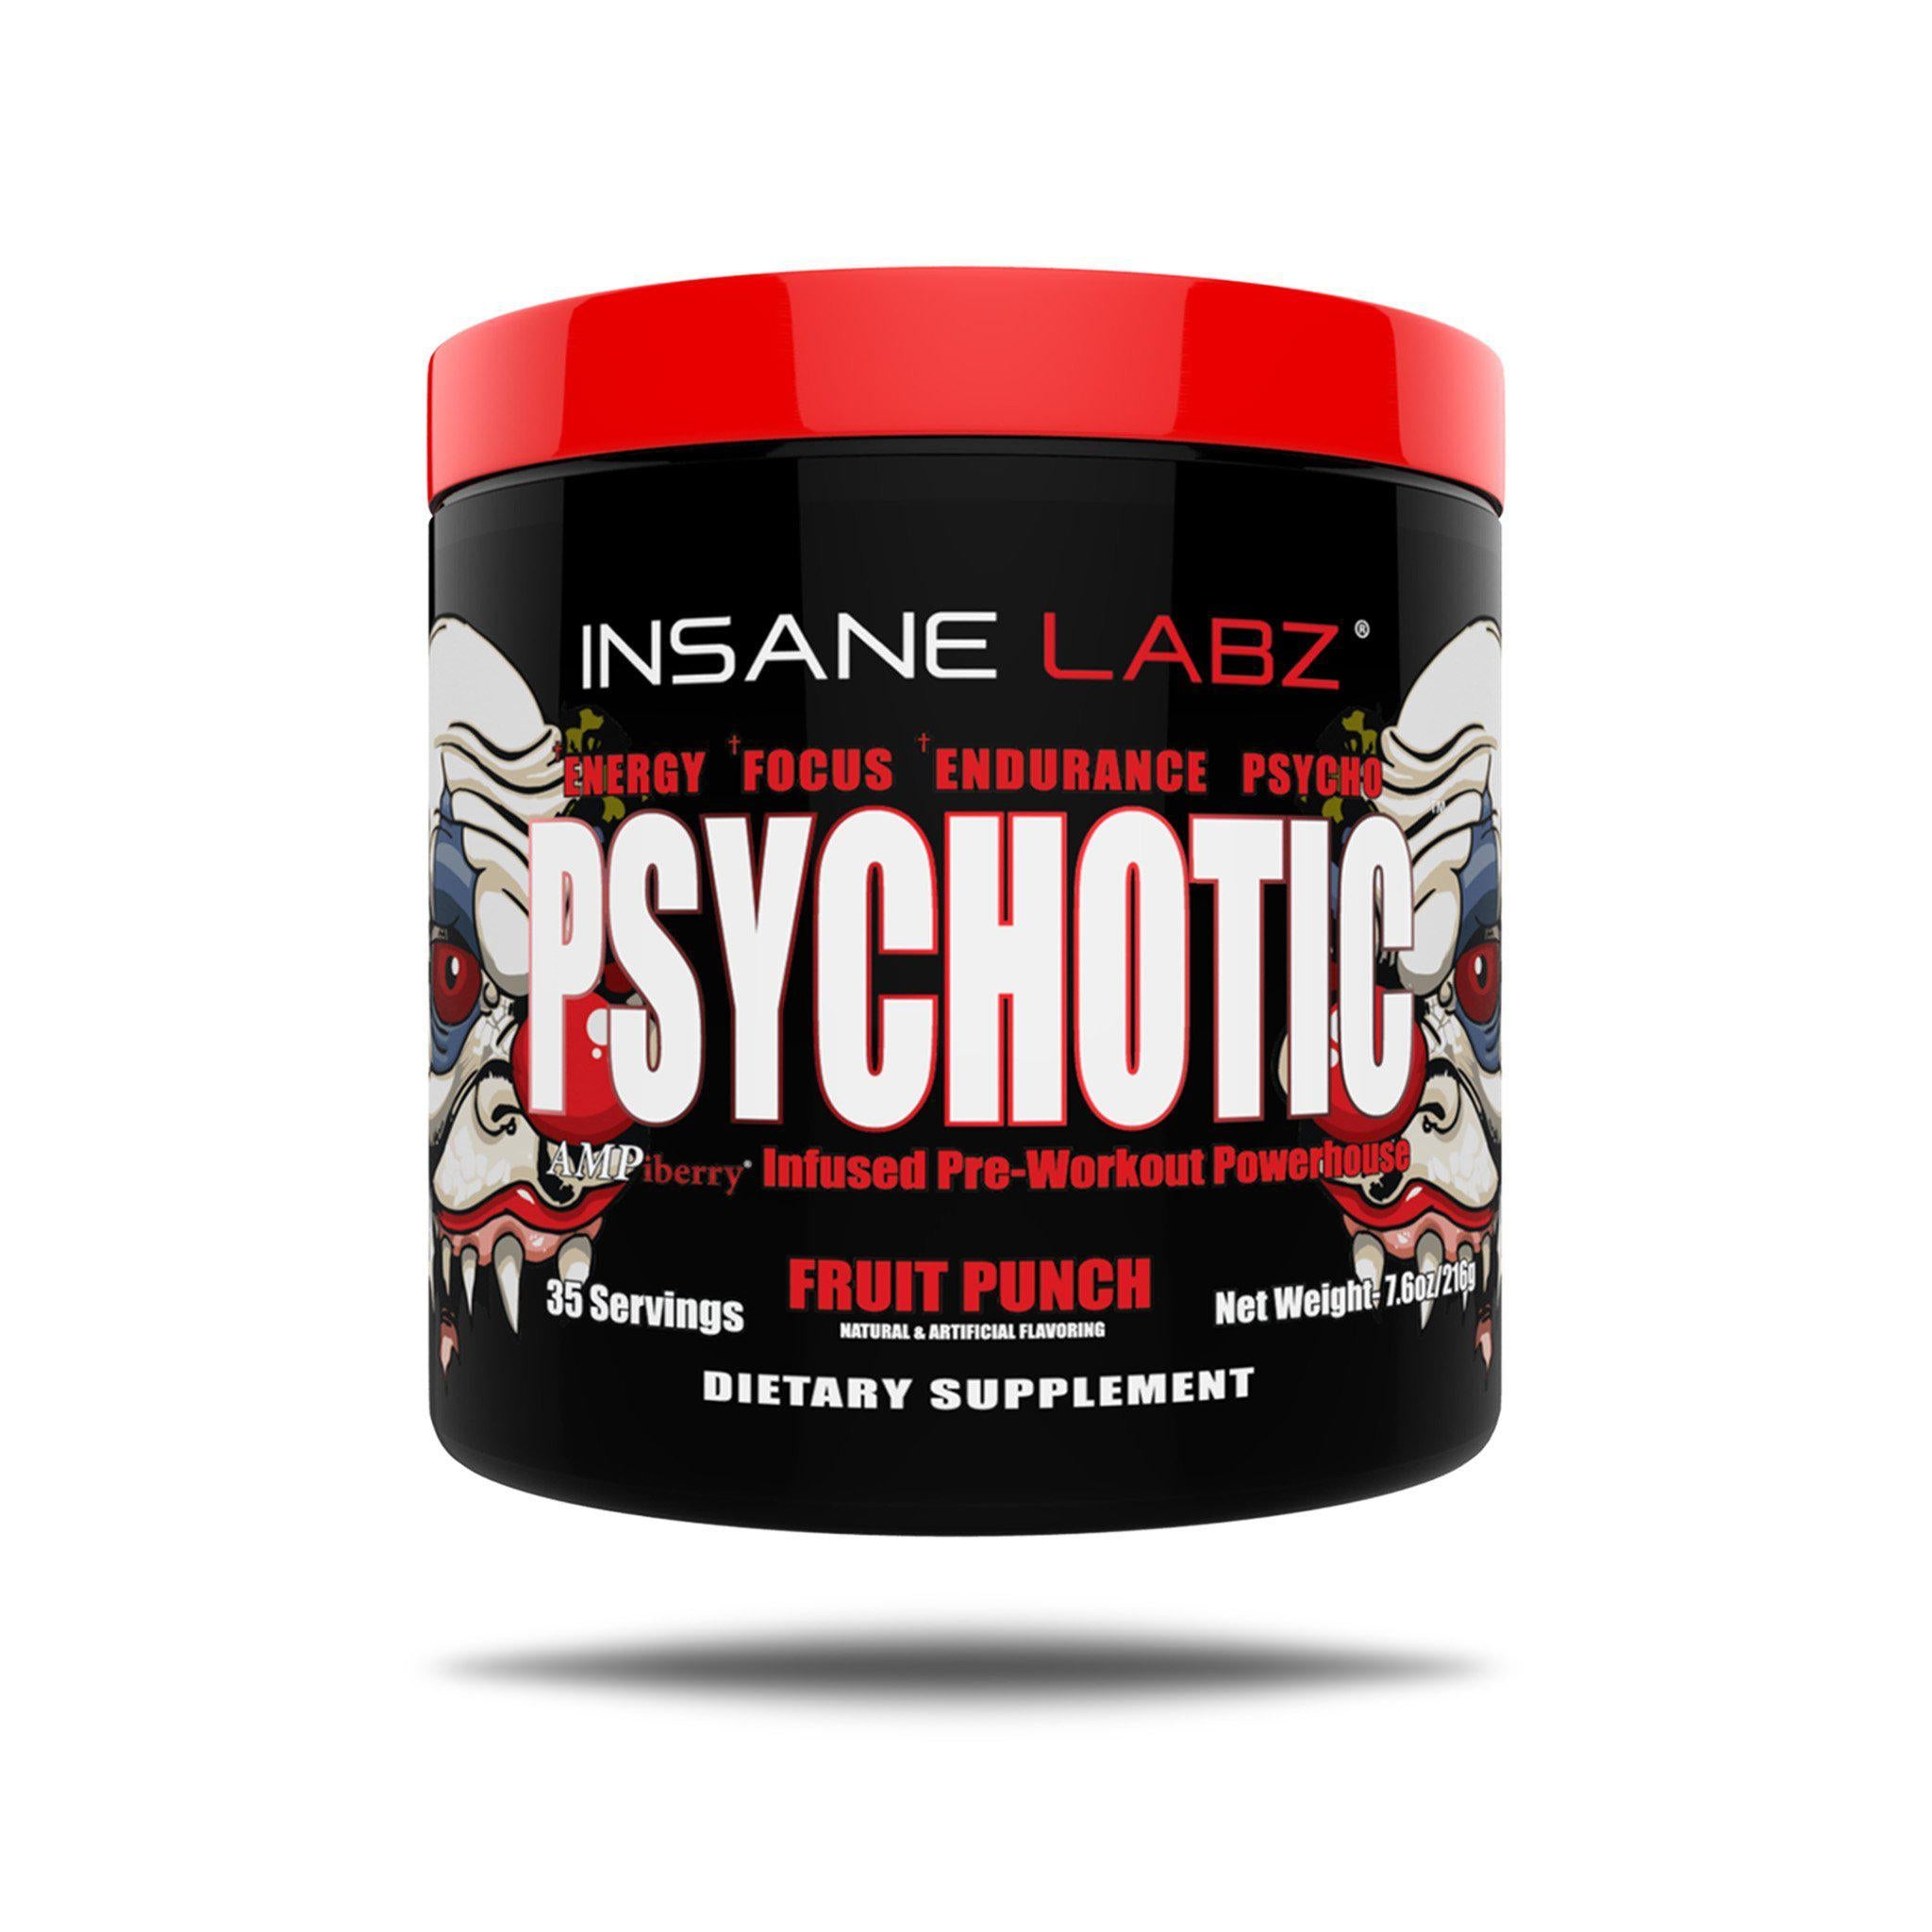 PSYCHOTIC-Insane Labz-Fruit Punch-35 Servings-Mr. Nutrition